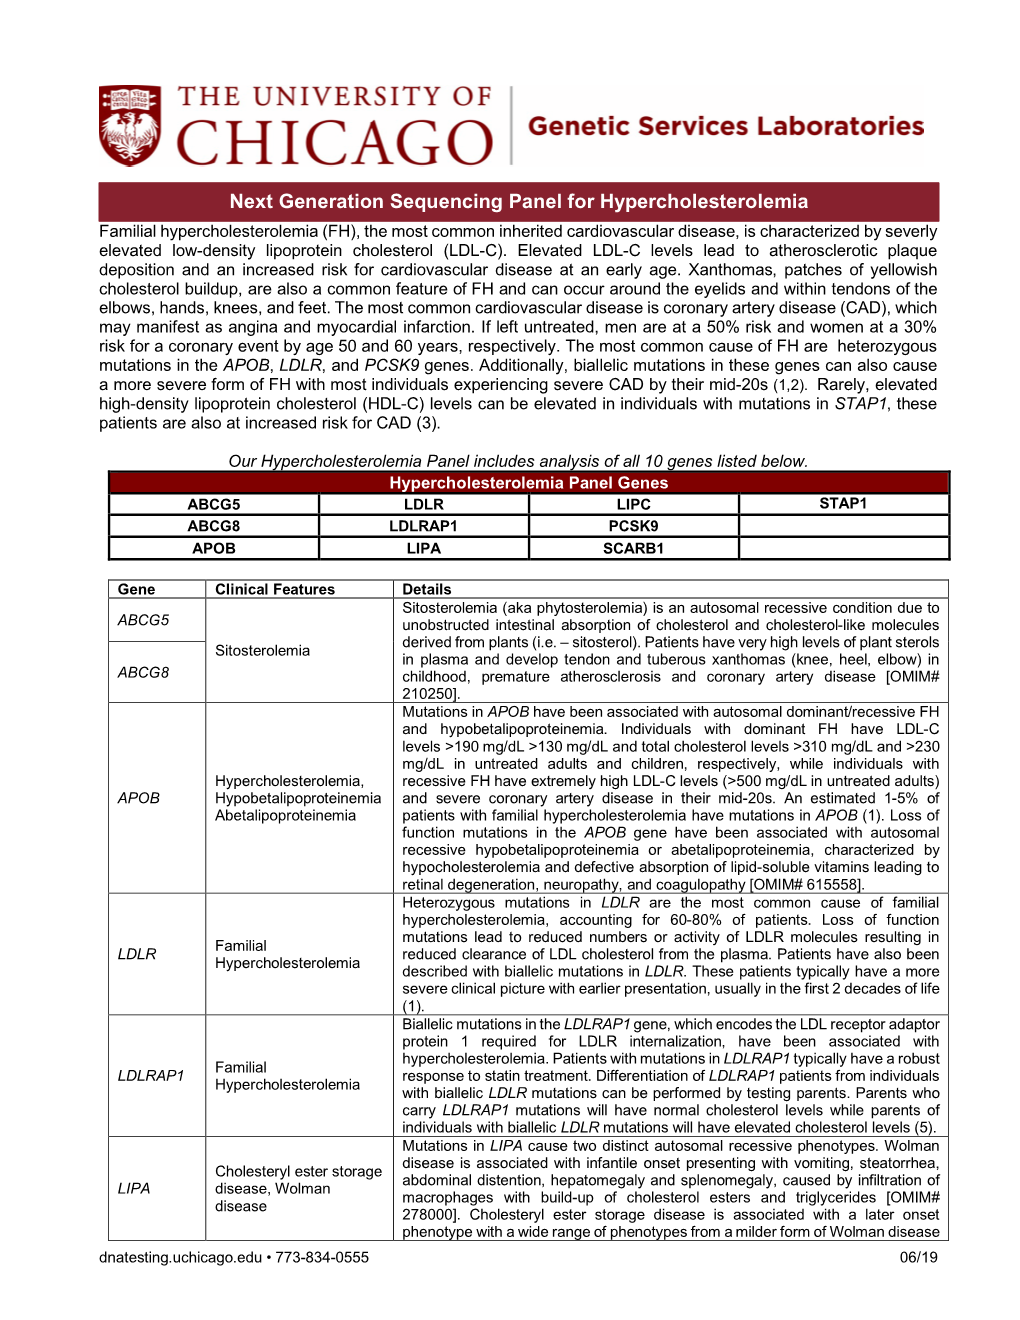 Hypercholesterlemia Information Sheet 6-10-19